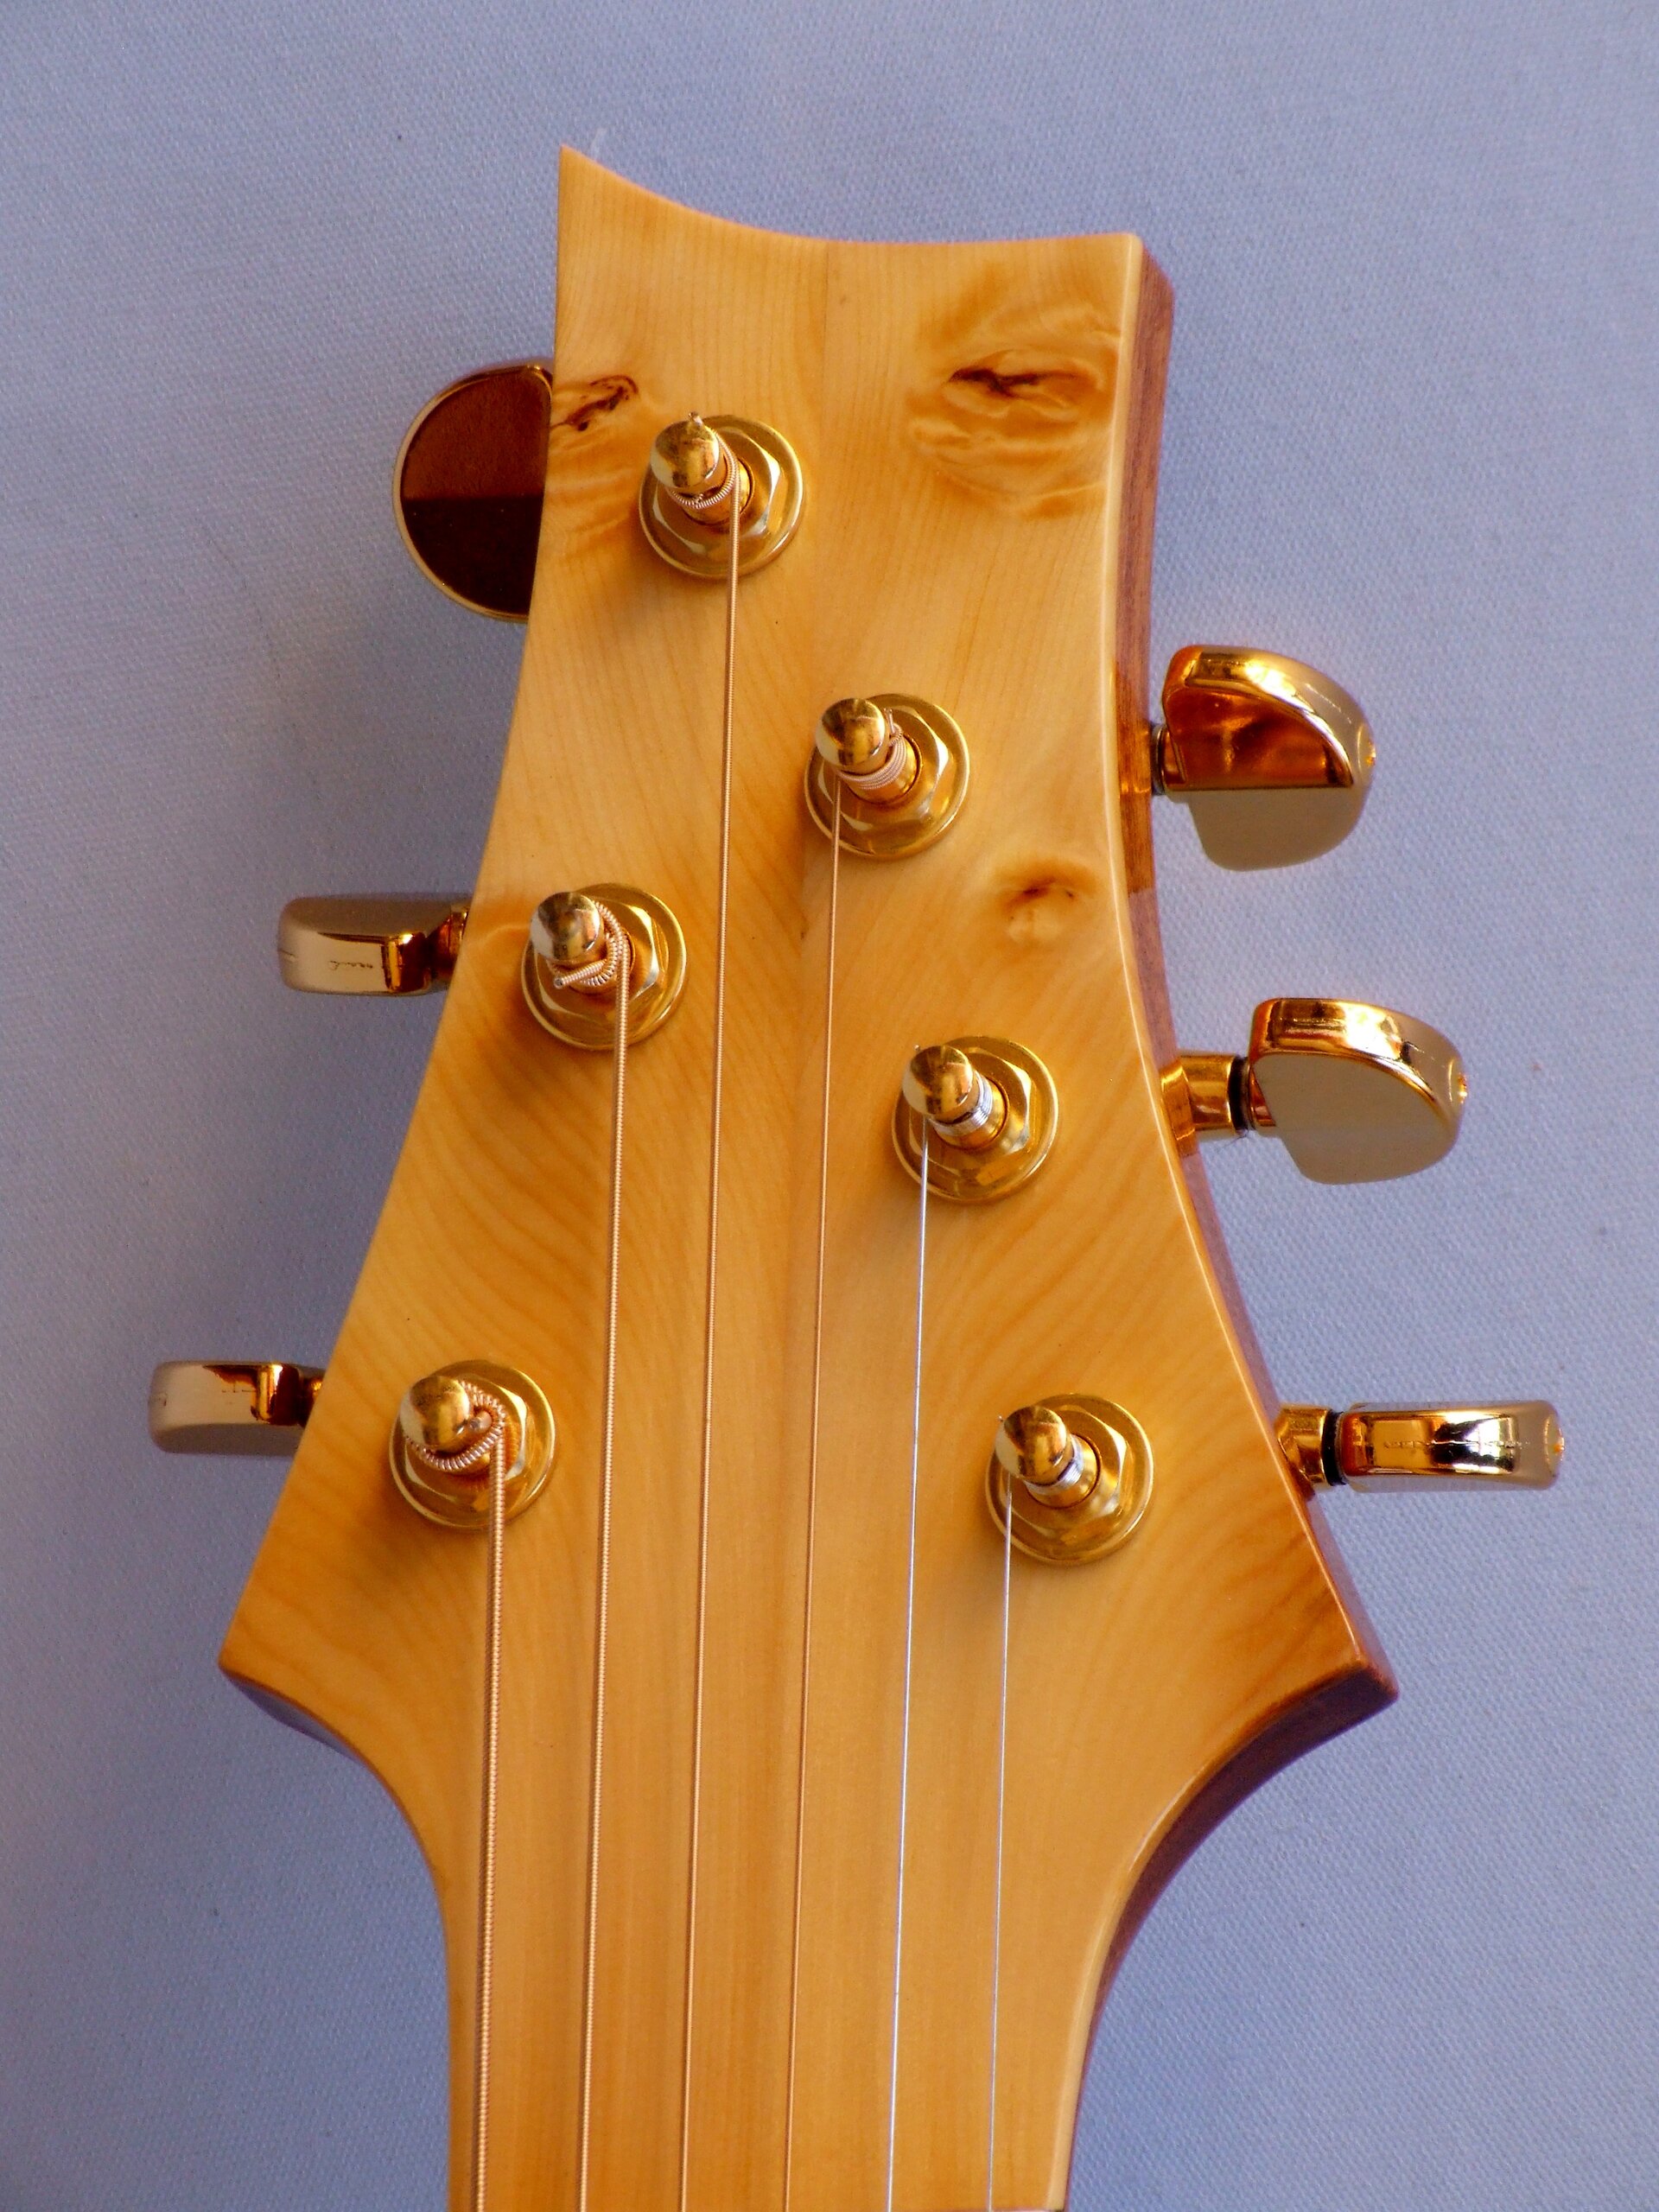 Custom guitars. Huon pine headstock facing on The Shed guitar